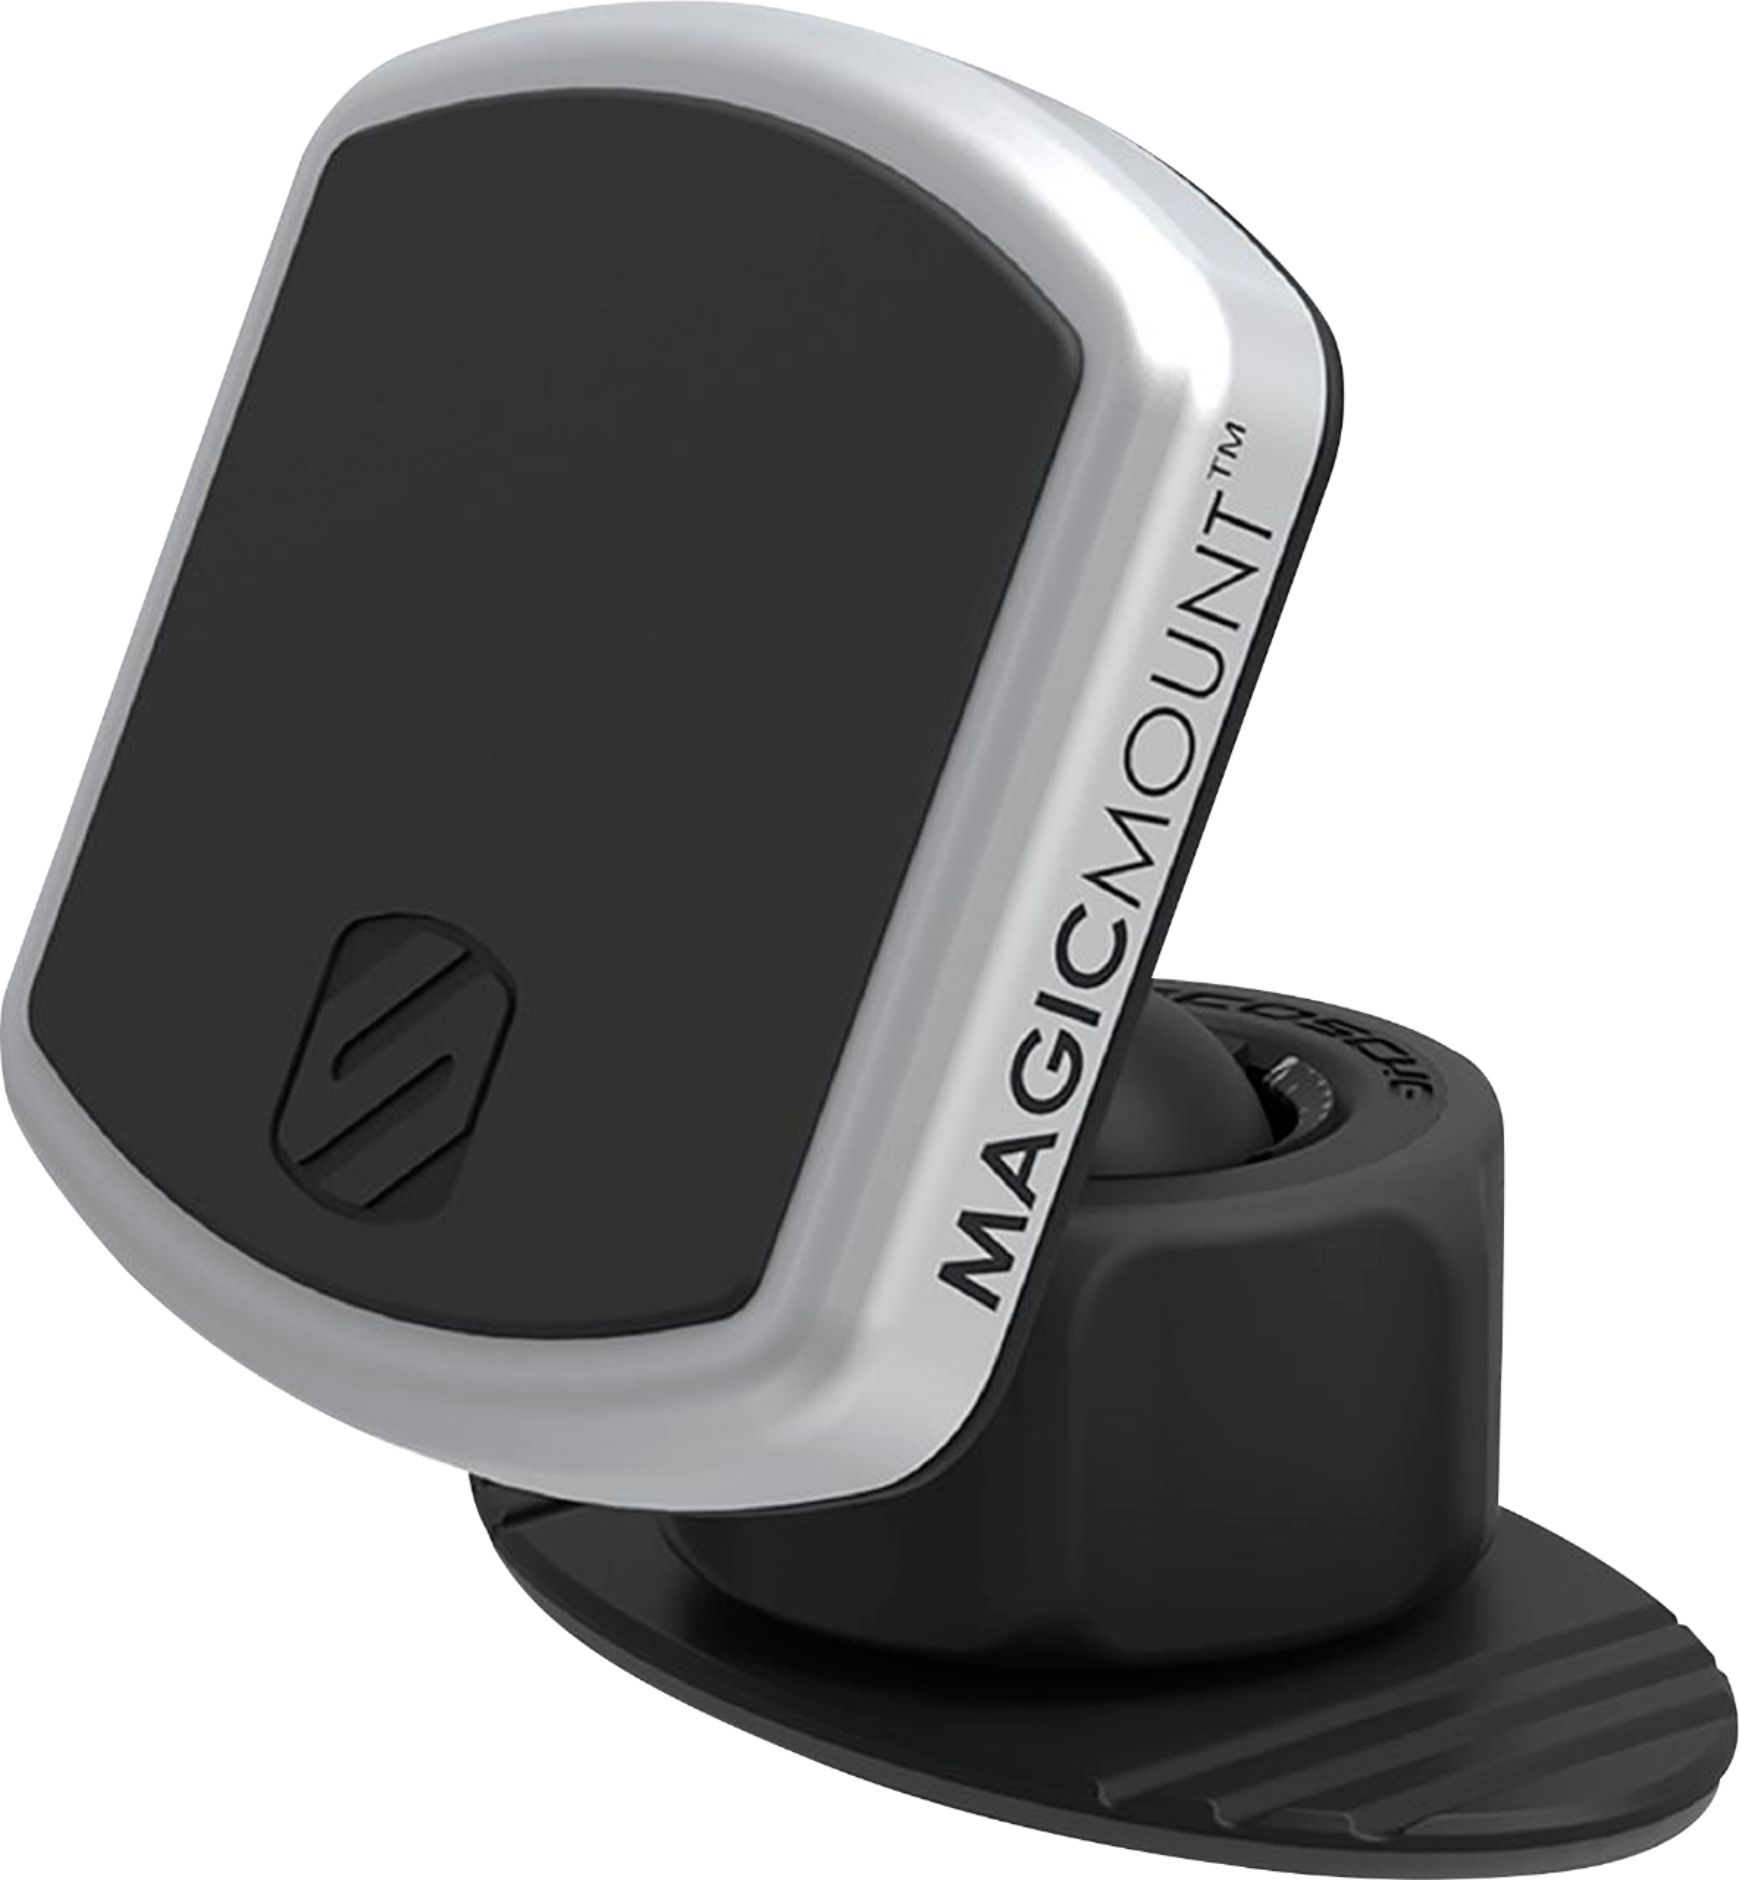 Scosche - MagicMOUNT Pro Dash Magnetic Holder for Mobile Phones - Black